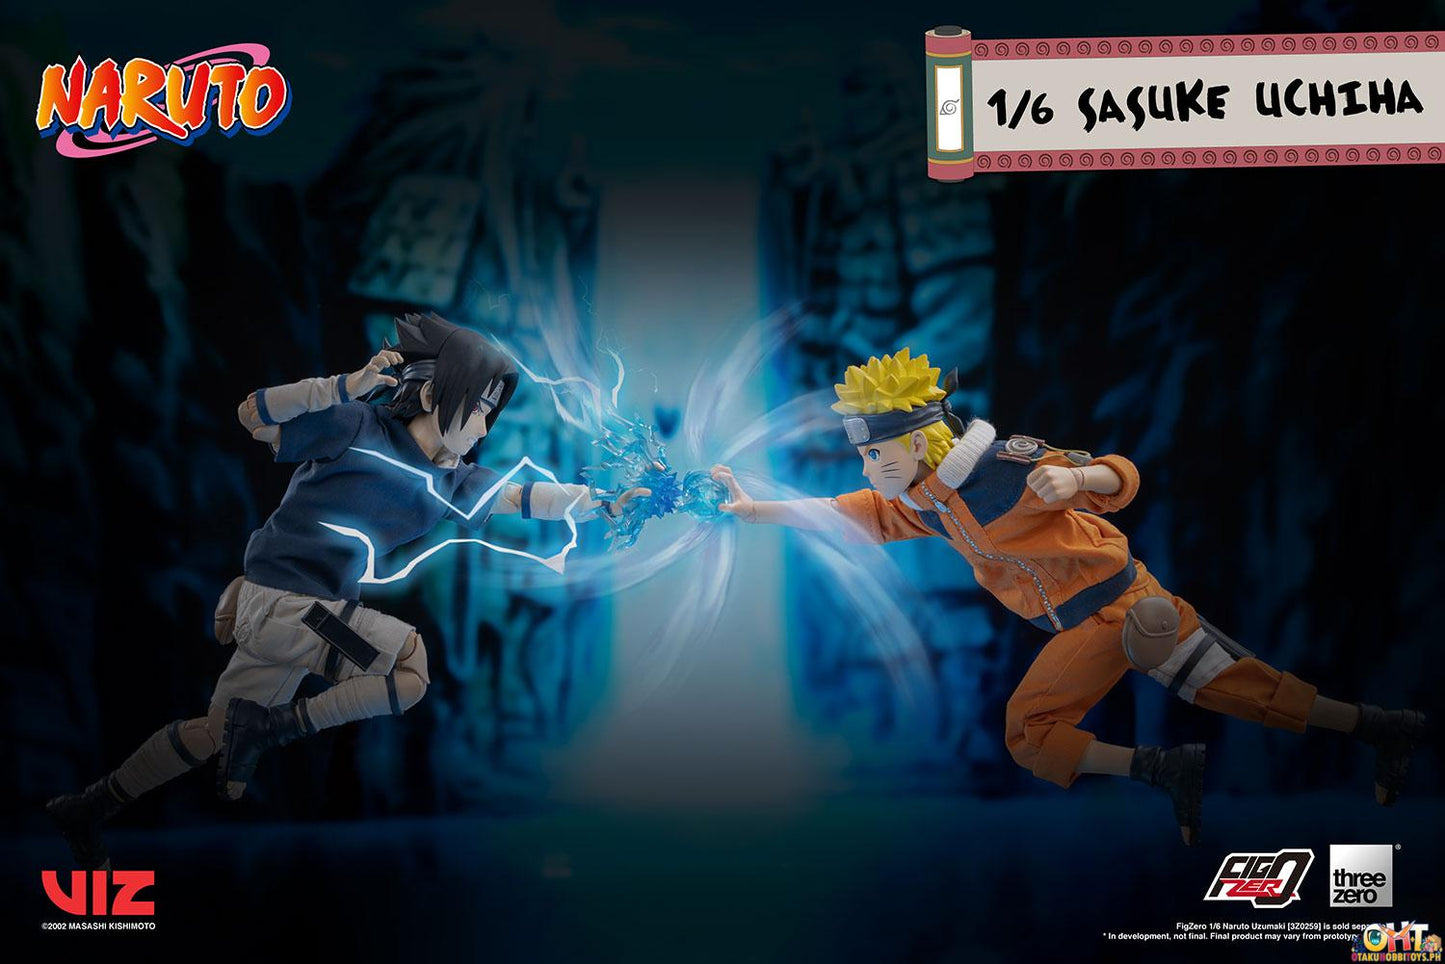 Threezero Naruto FigZero 1/6 Sasuke Uchiha